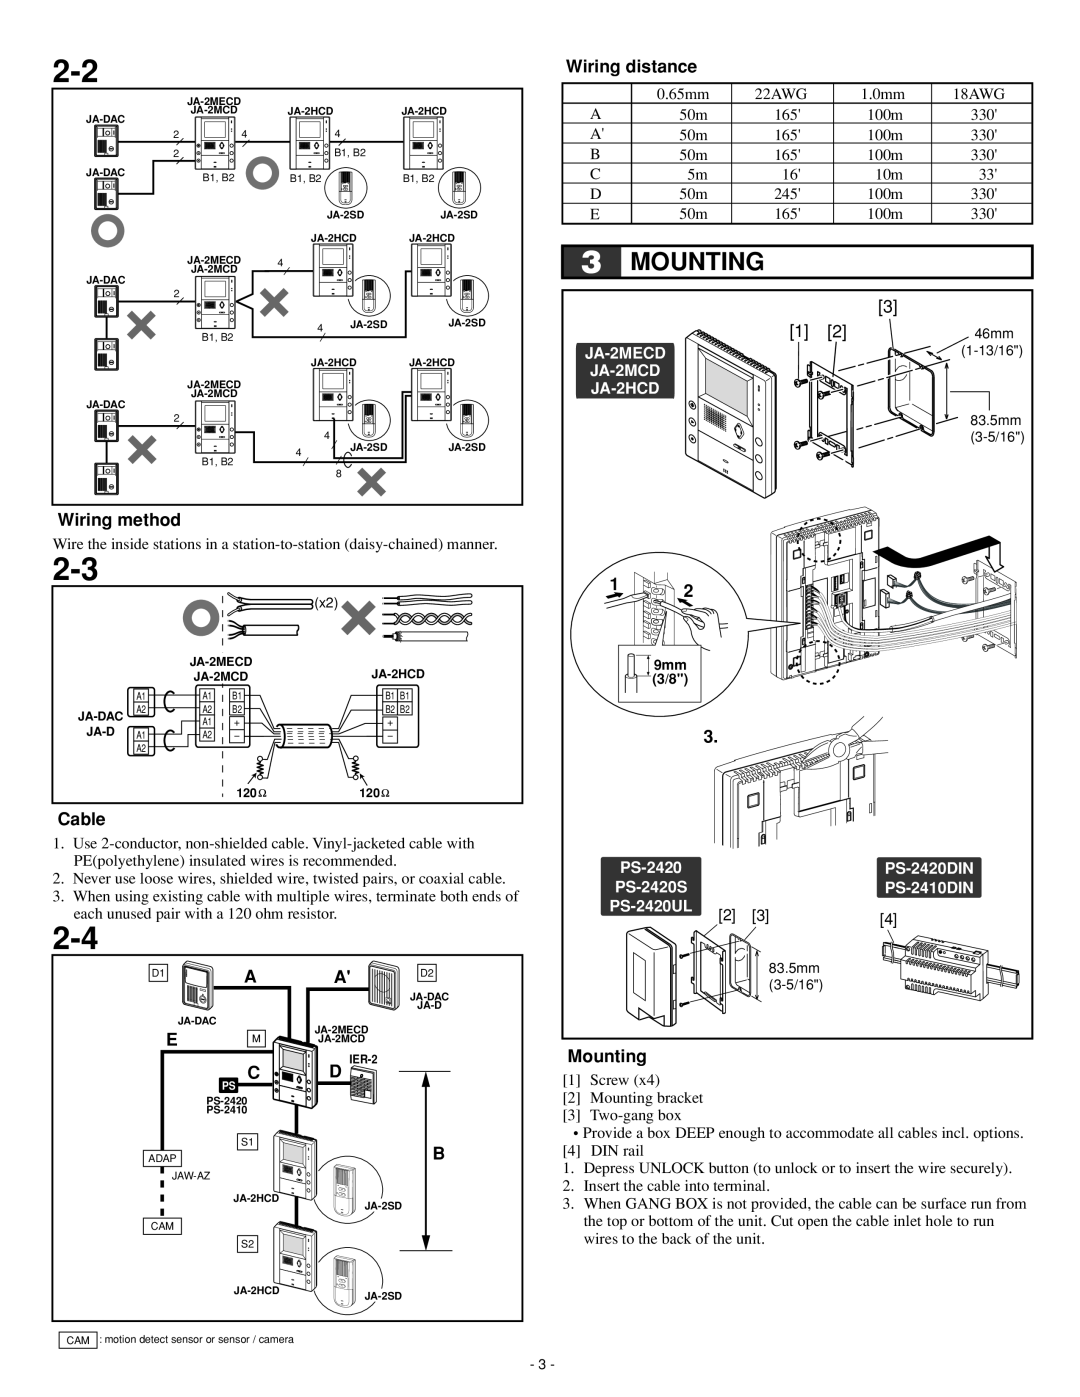 Aiphone Ja-2hcd, JA-2MECD, JA-2MCD operation manual Mounting, Wiring method, Cable, Wiring distance 